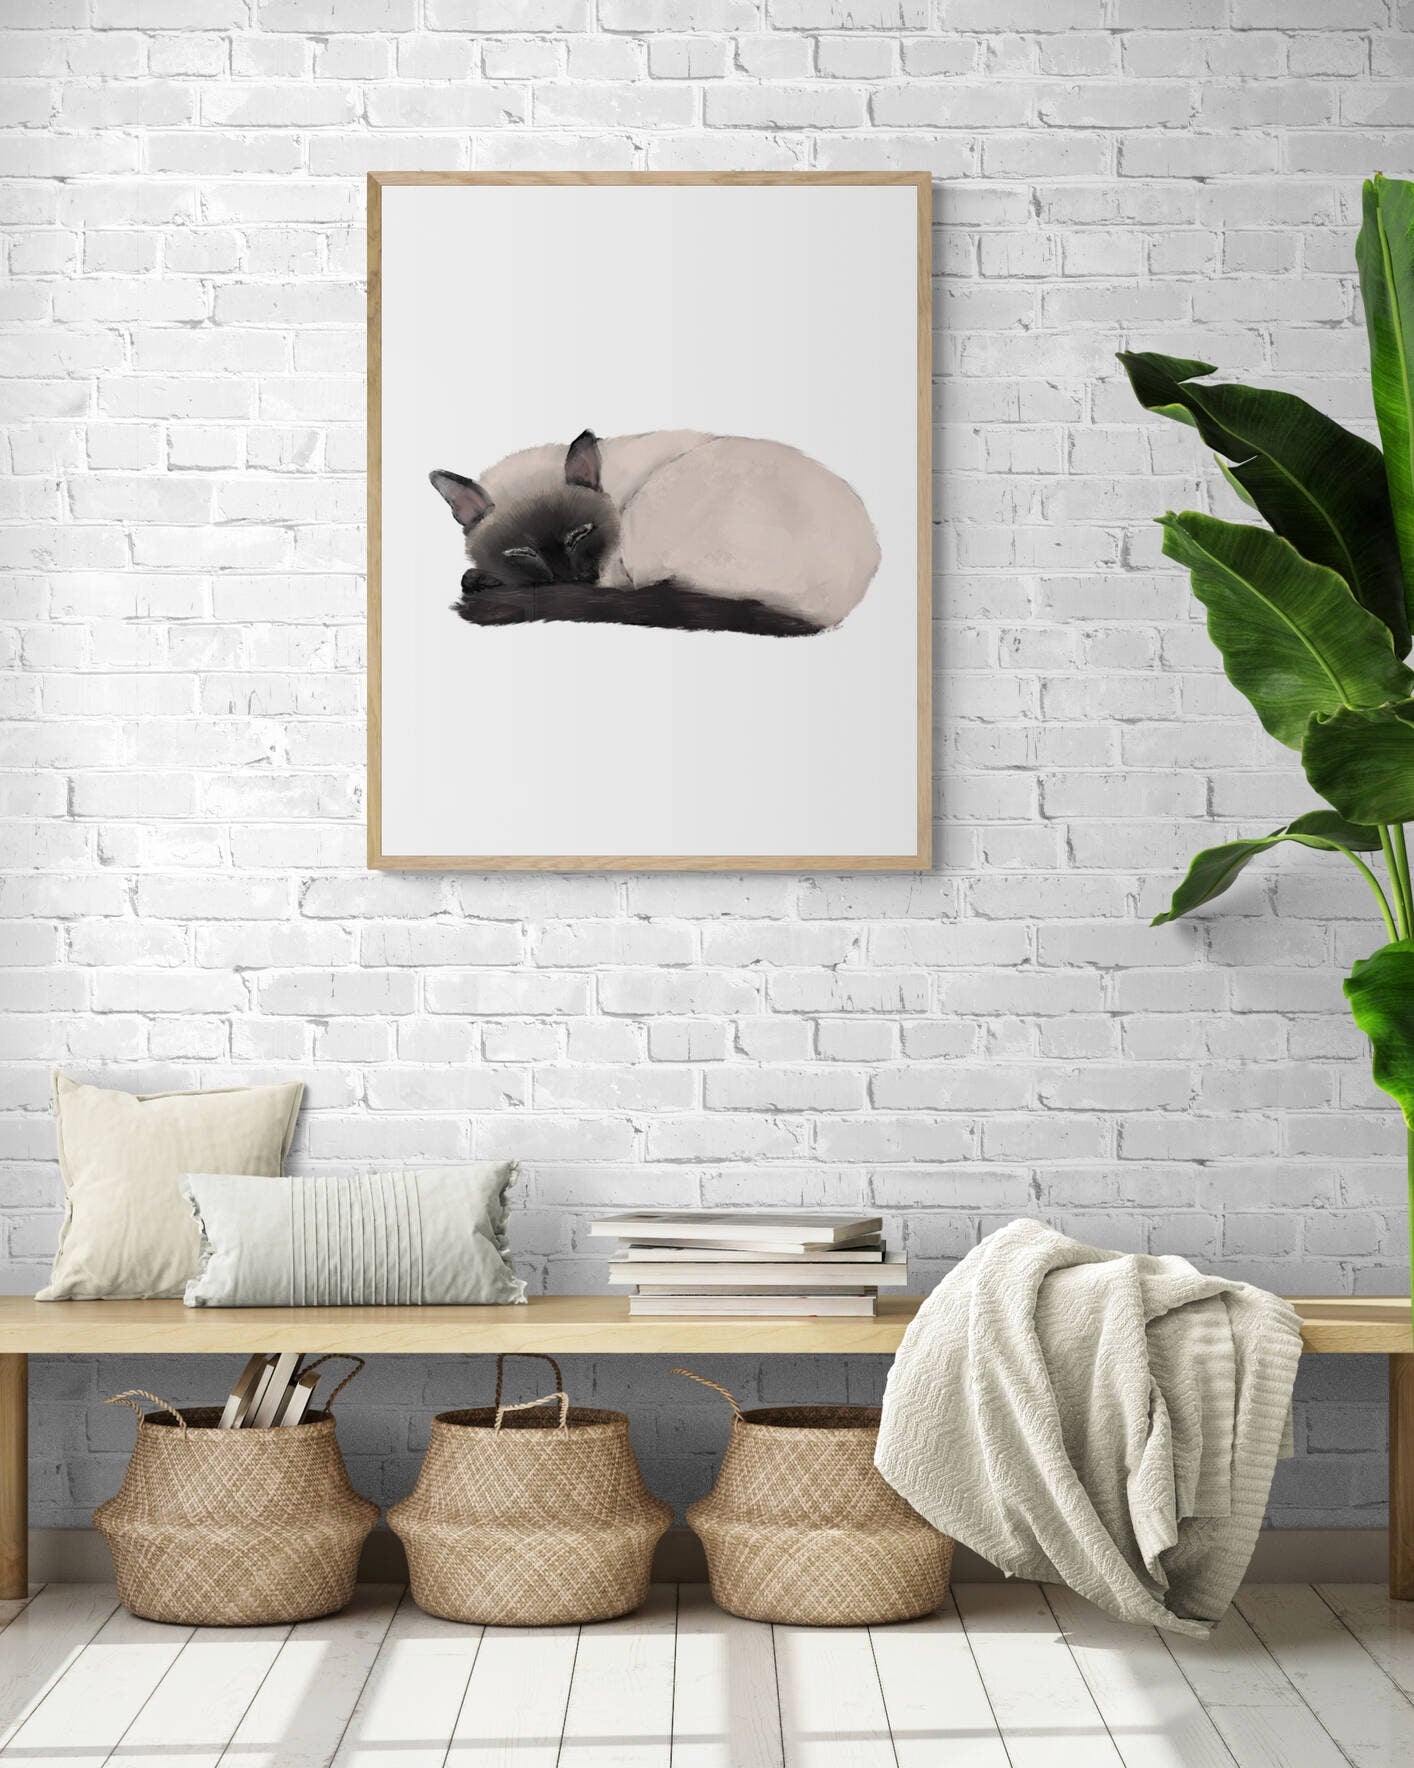 Sleeping Siamese Cat Print, Sleeping Cat Print, Sleeping Siamese Art, Cat Illustration, Home Decor, Kitten Painting, Cat Lover Gift